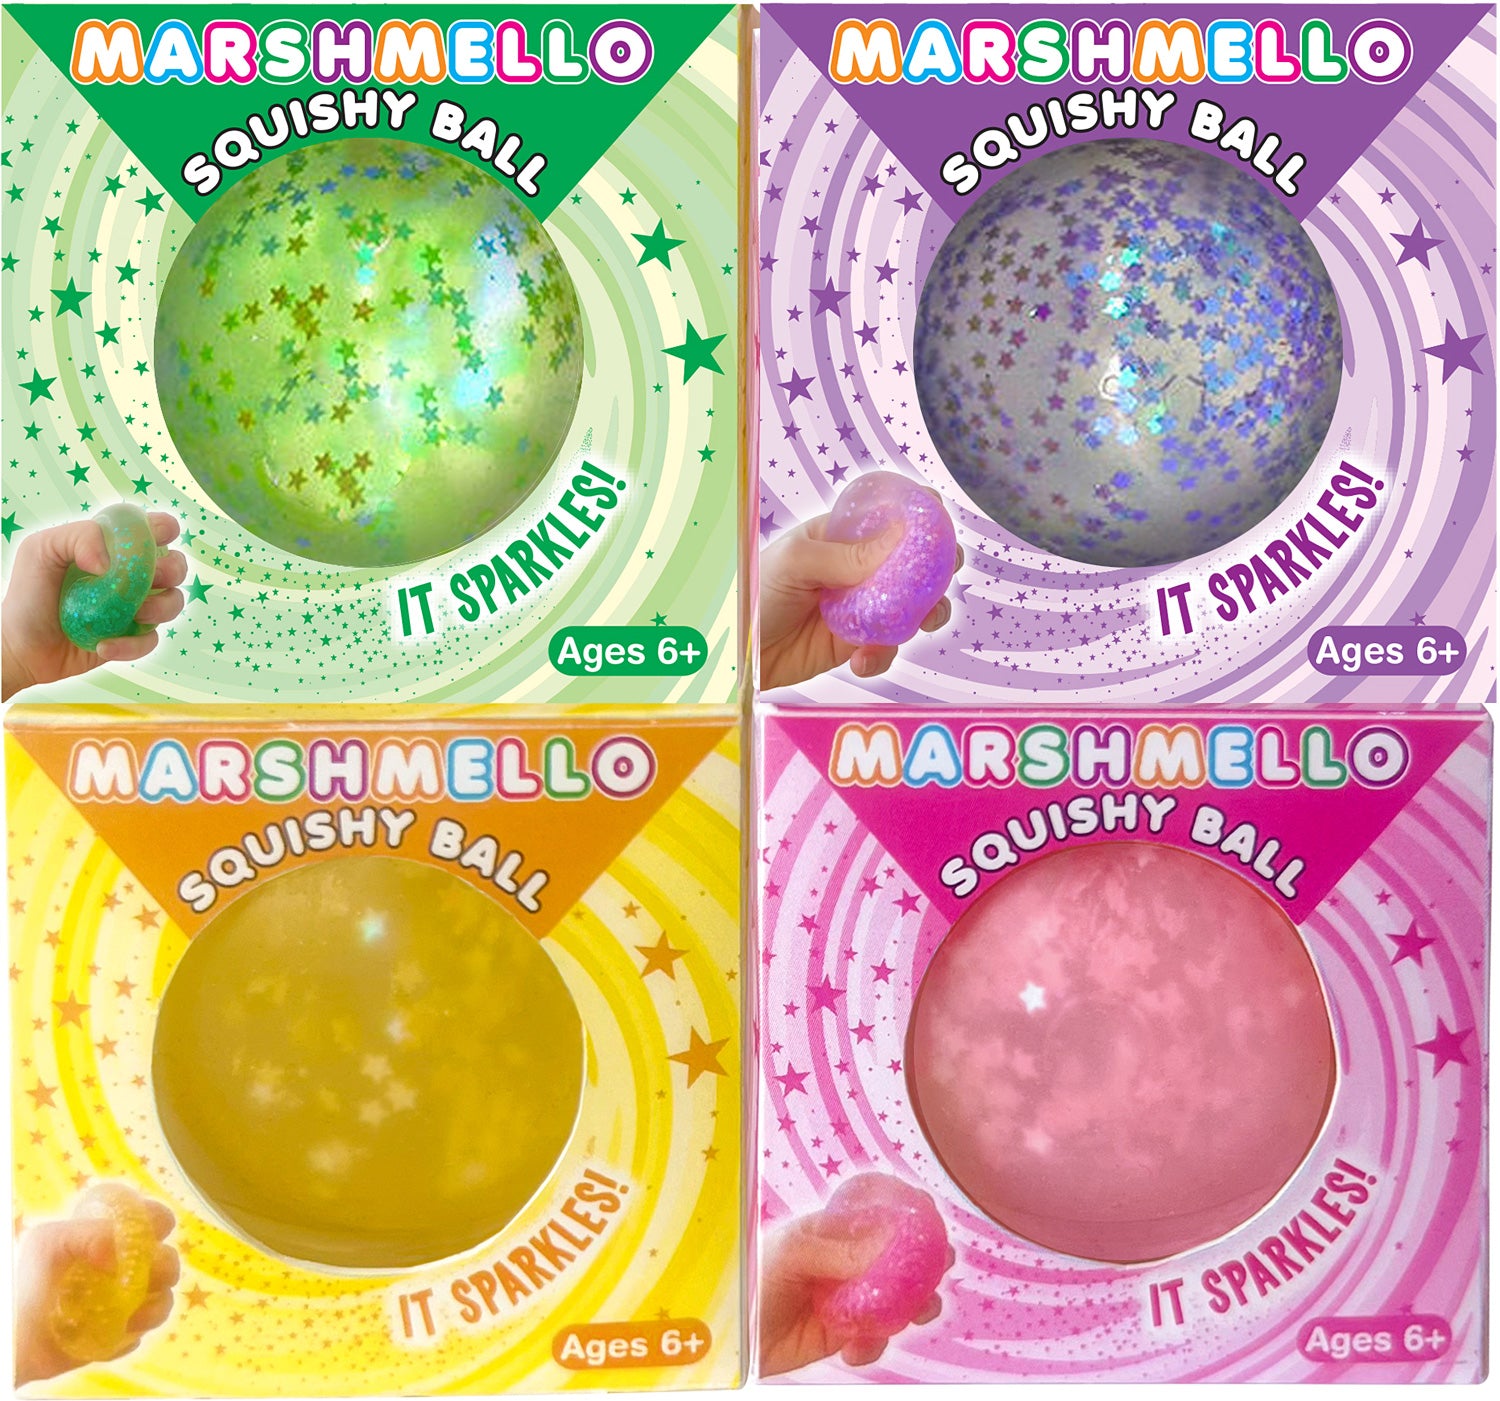 Marshmello Sparkle Squishy Ball by Zorbitz #8244-16